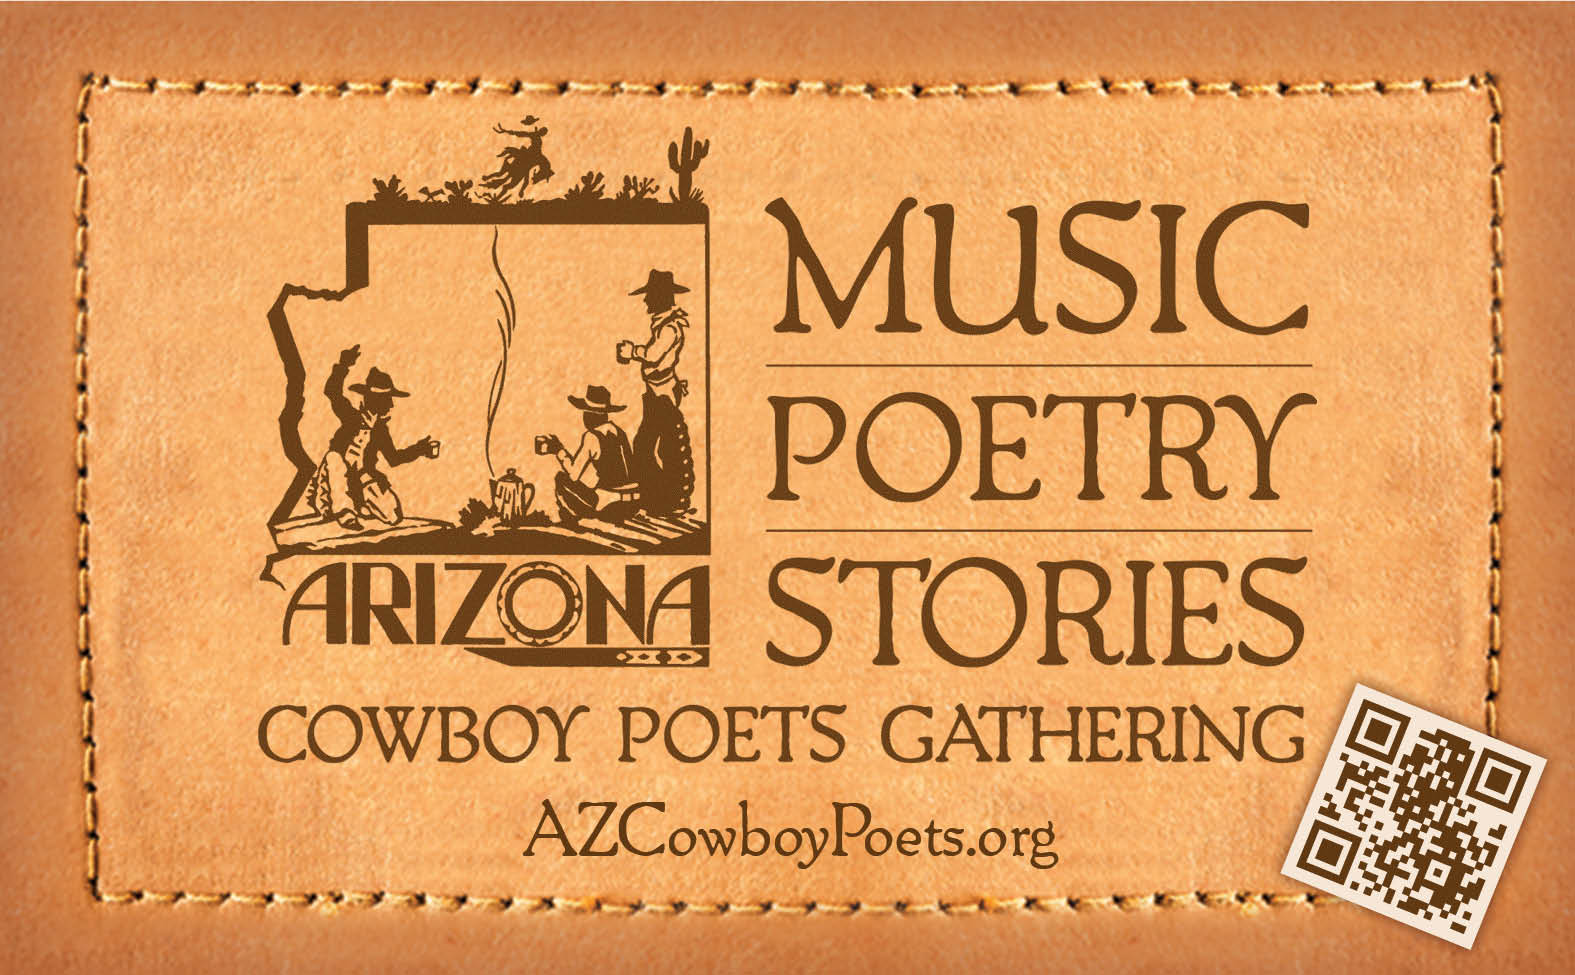 Arizona Cowboy Poets Gathering Inc.